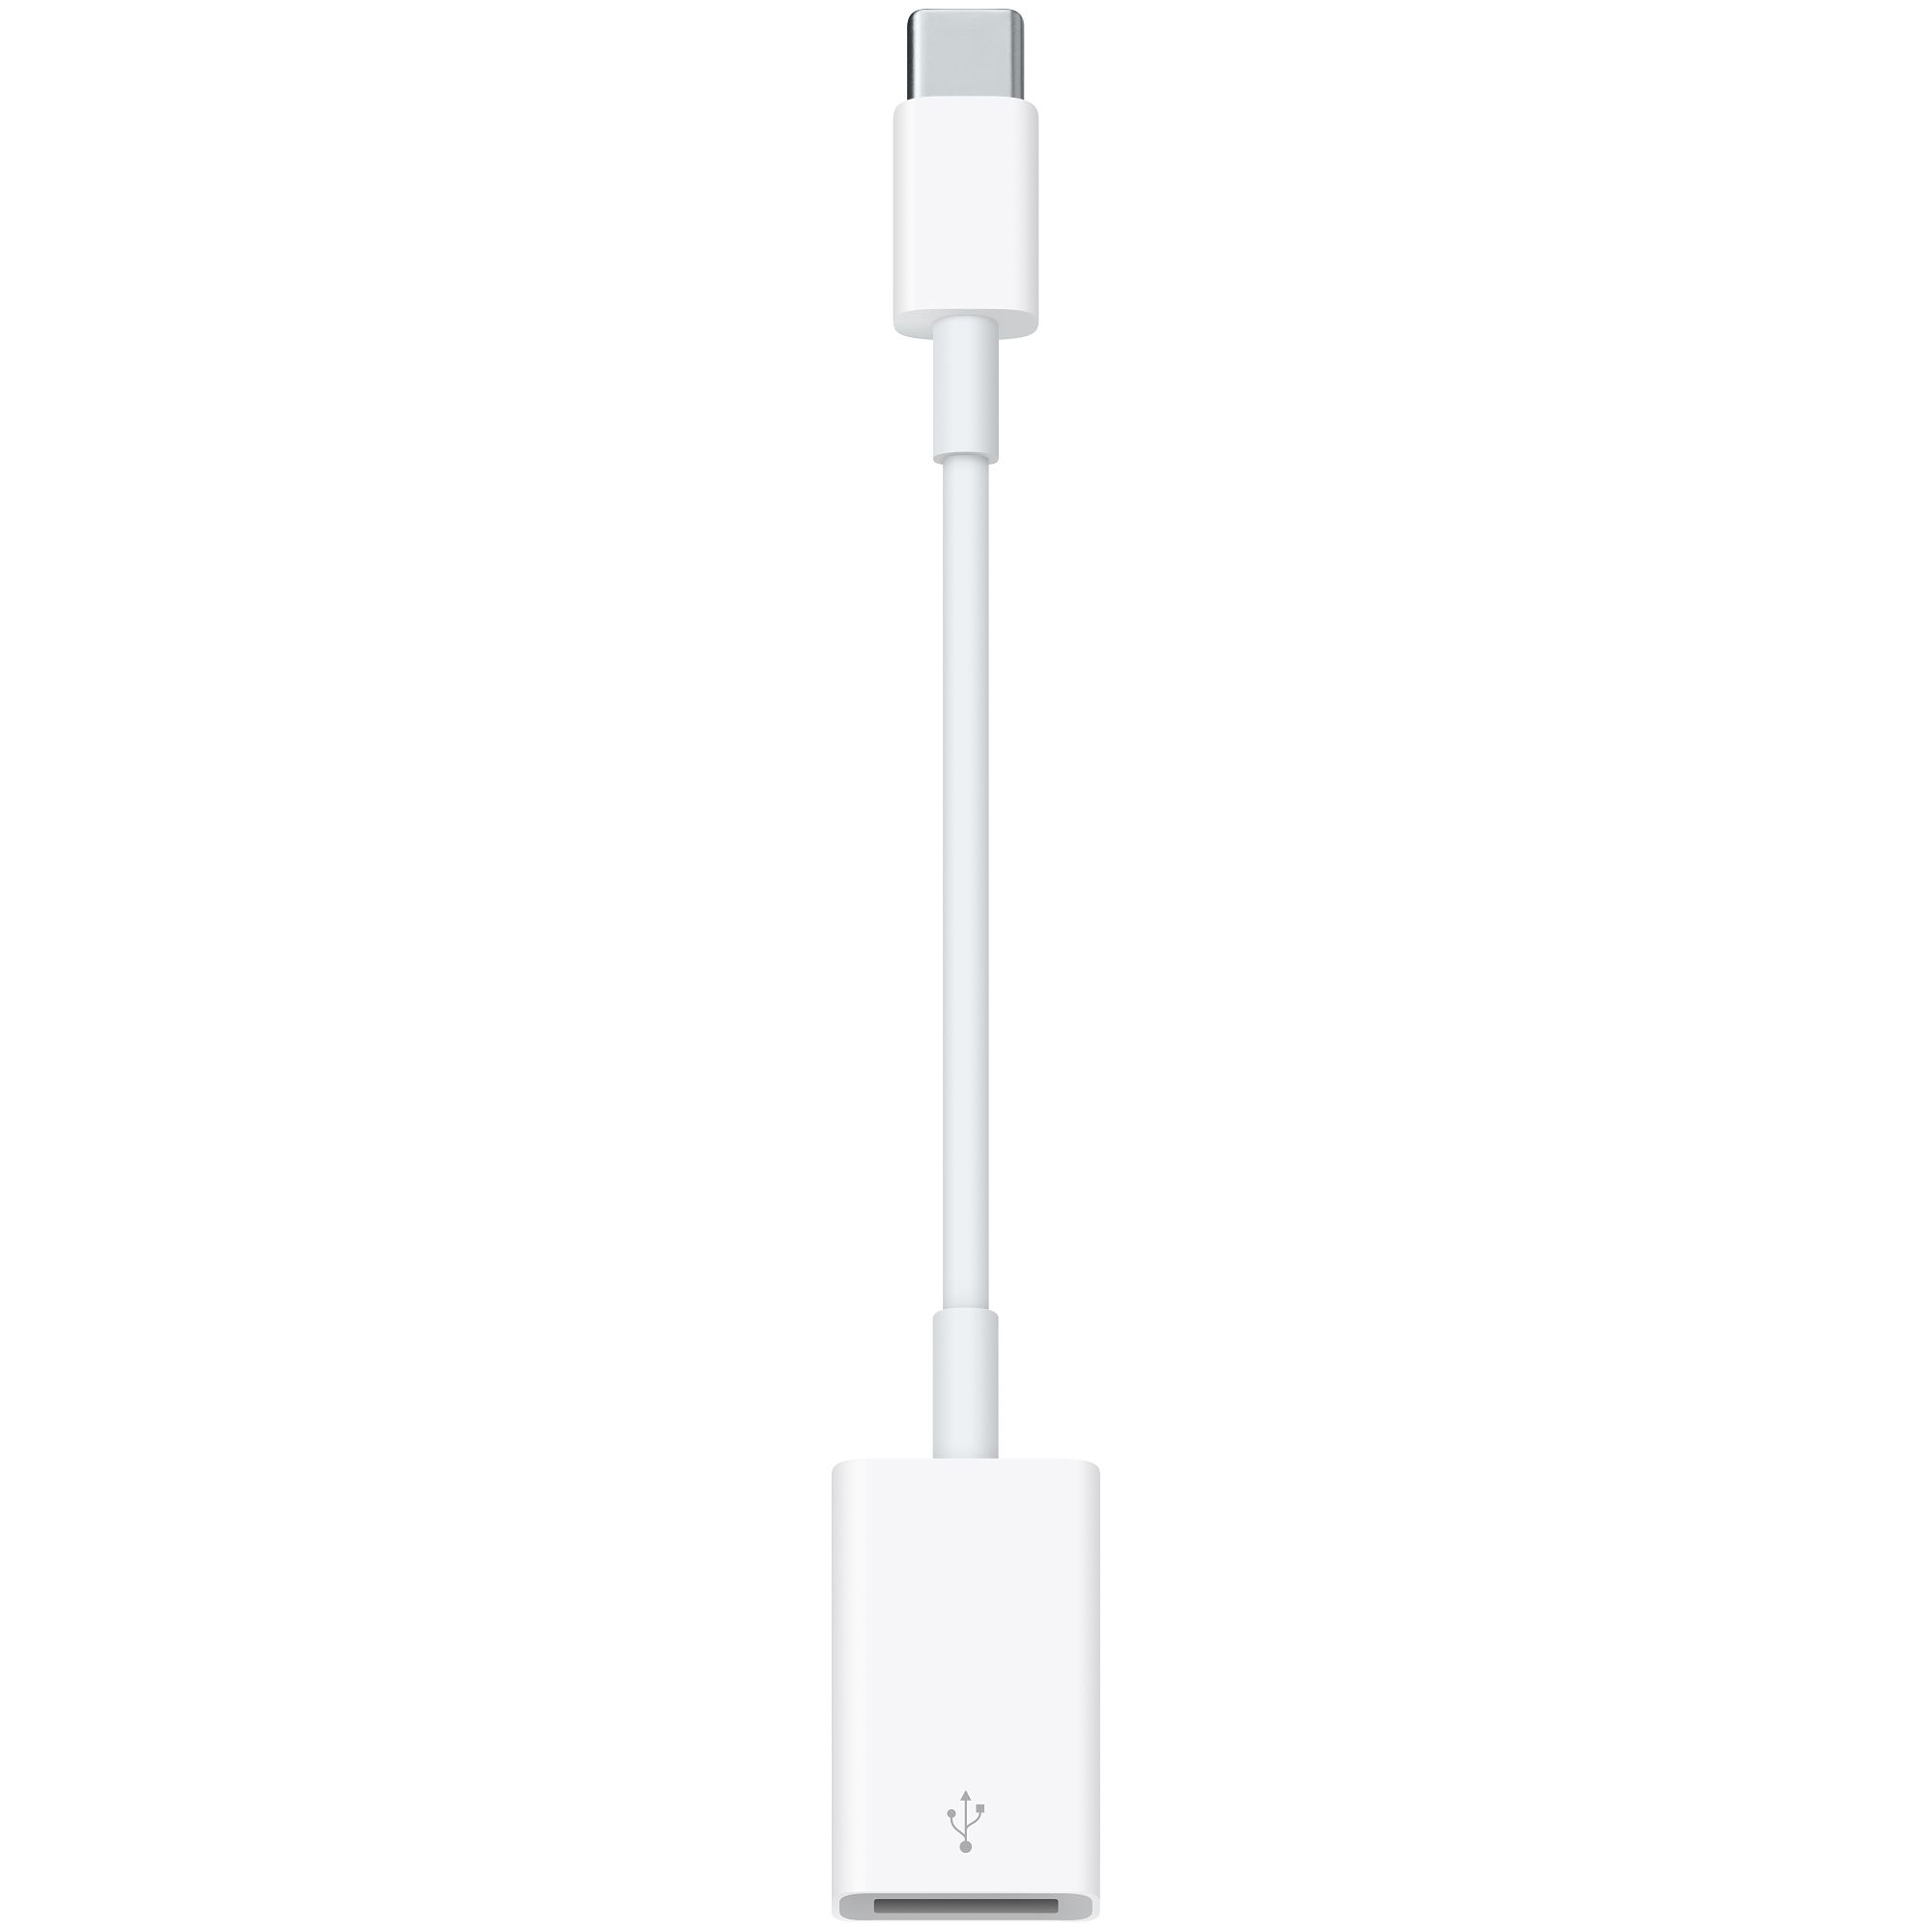 MacBook USB-C to USB Adapter